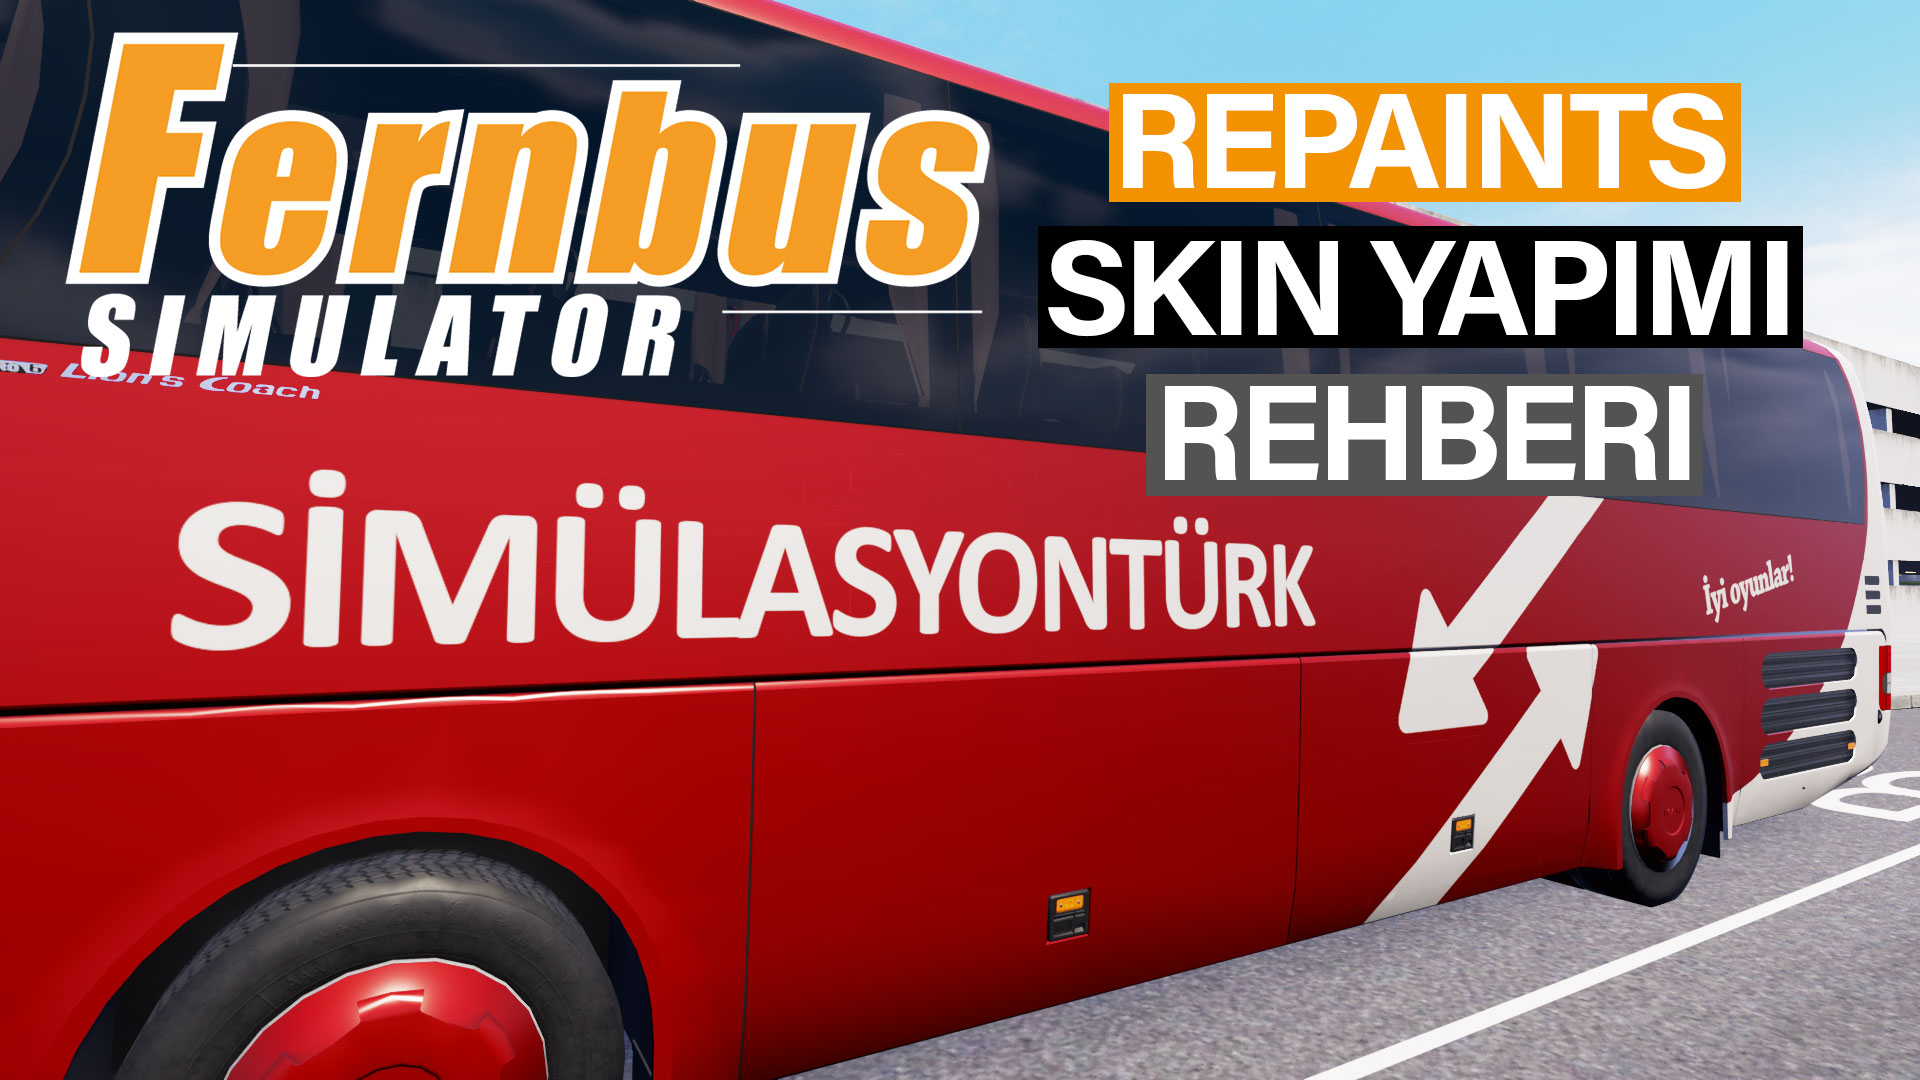 fernbus-coach-simulator-skin-yapimi-rehberi-repaints-manset